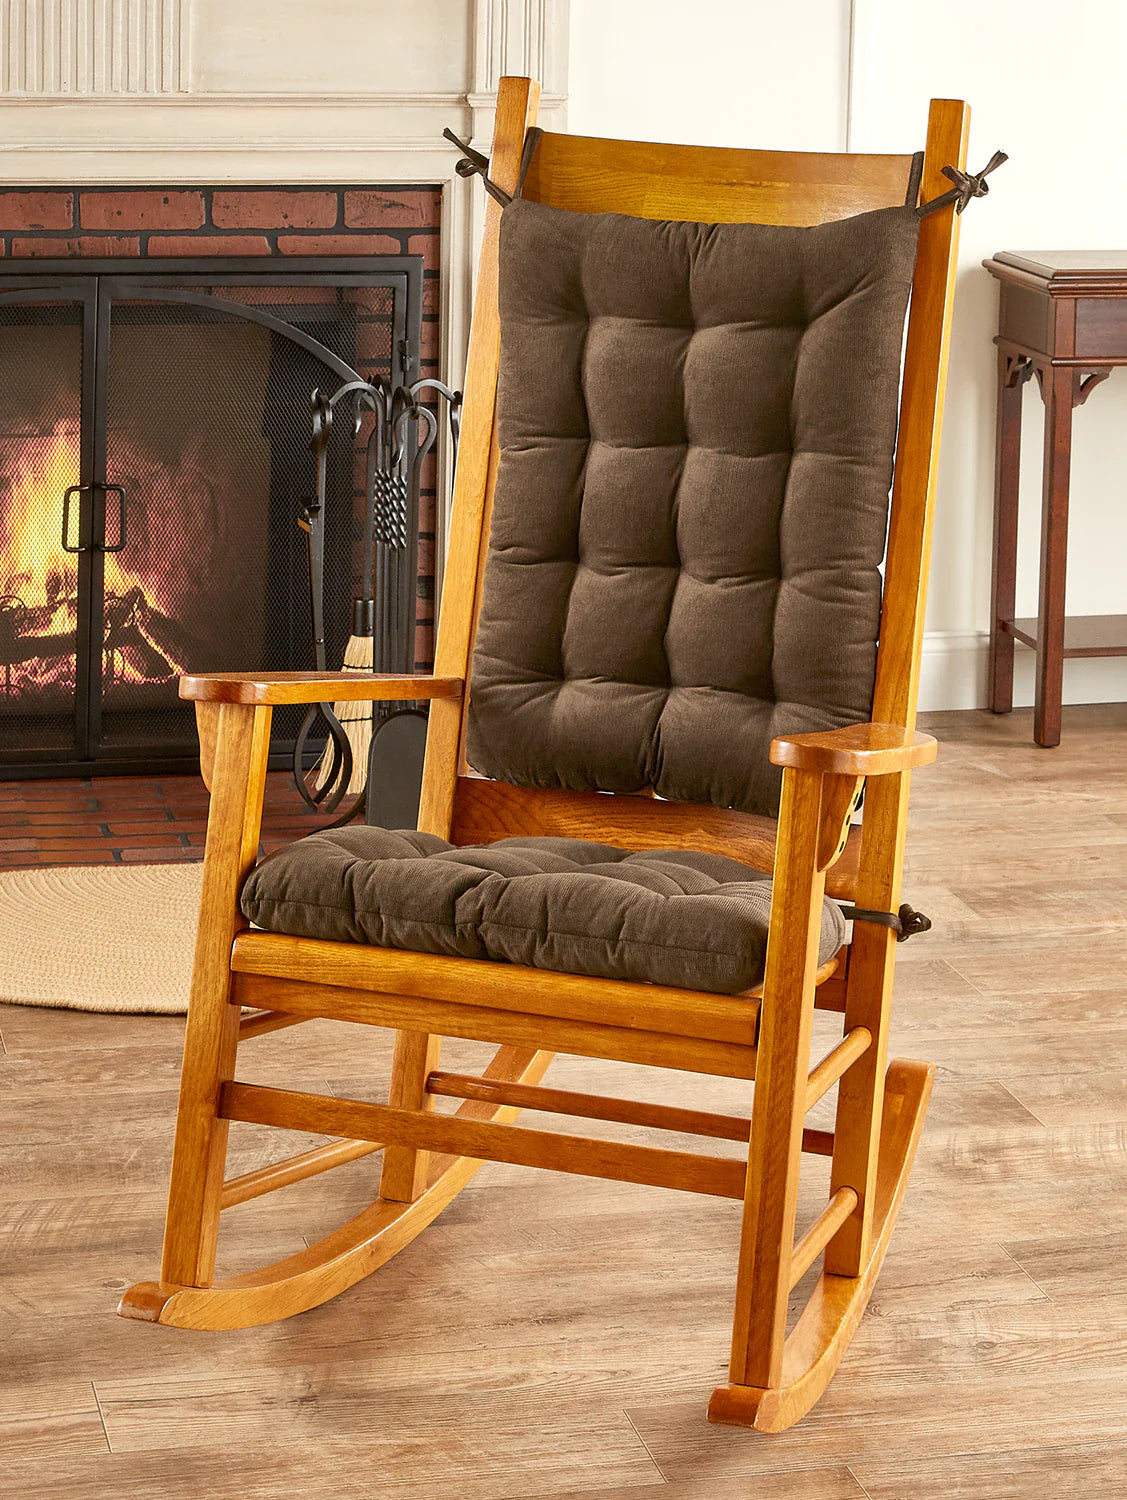 Never-Flatten Tufted Rocker Chair Cushion Set - Corduroy